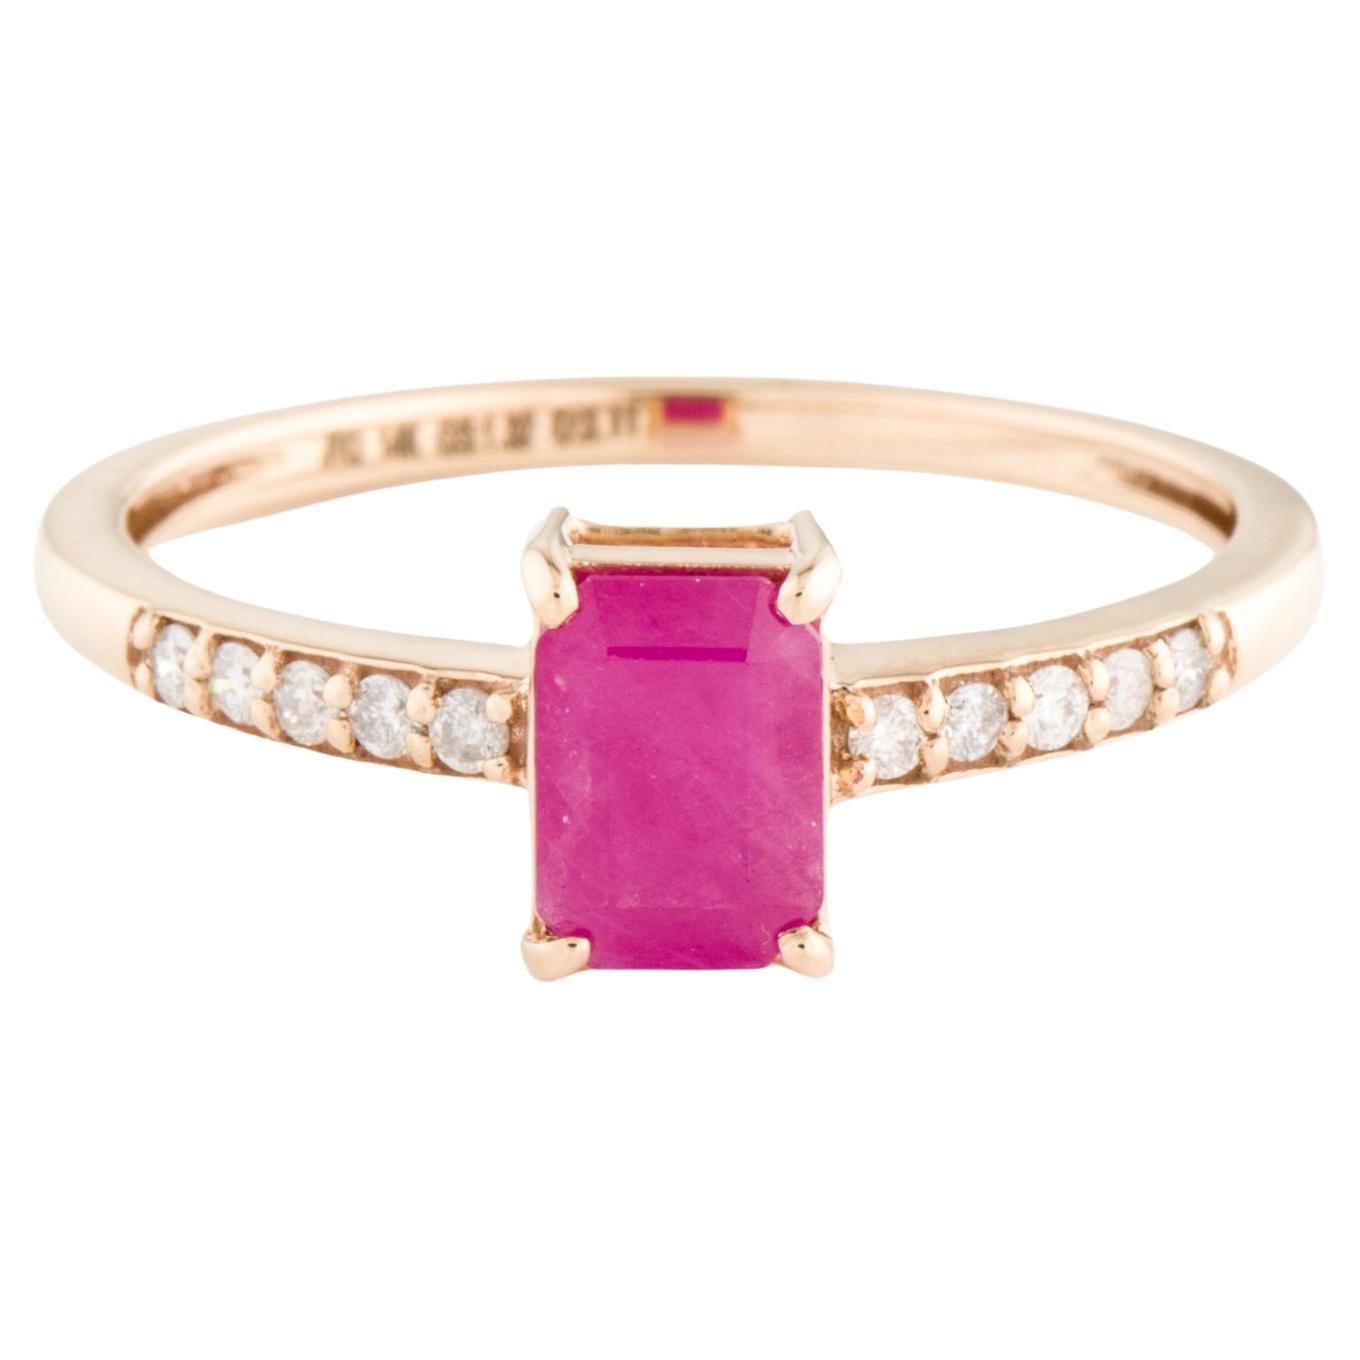 Dazzling 14K Ruby & Diamond Cocktail Ring - Size 8.75 - Fine Statement Jewelry For Sale